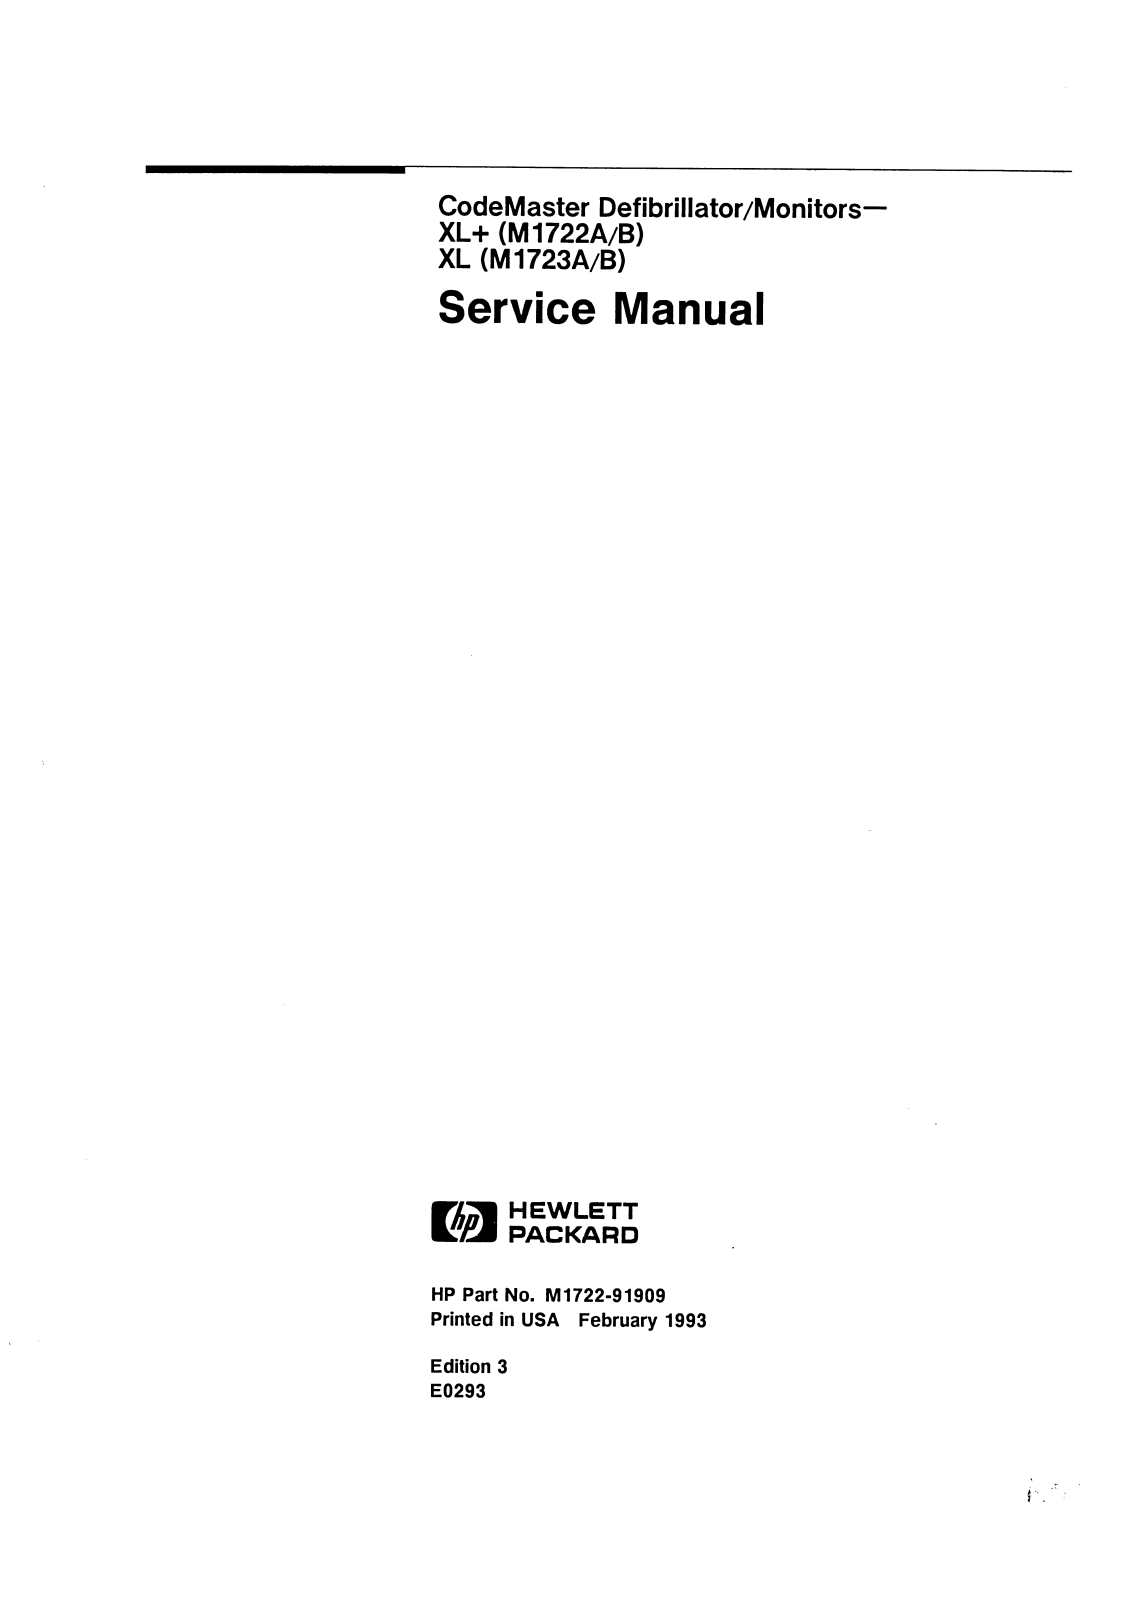 HP Codemaster XL Service manual